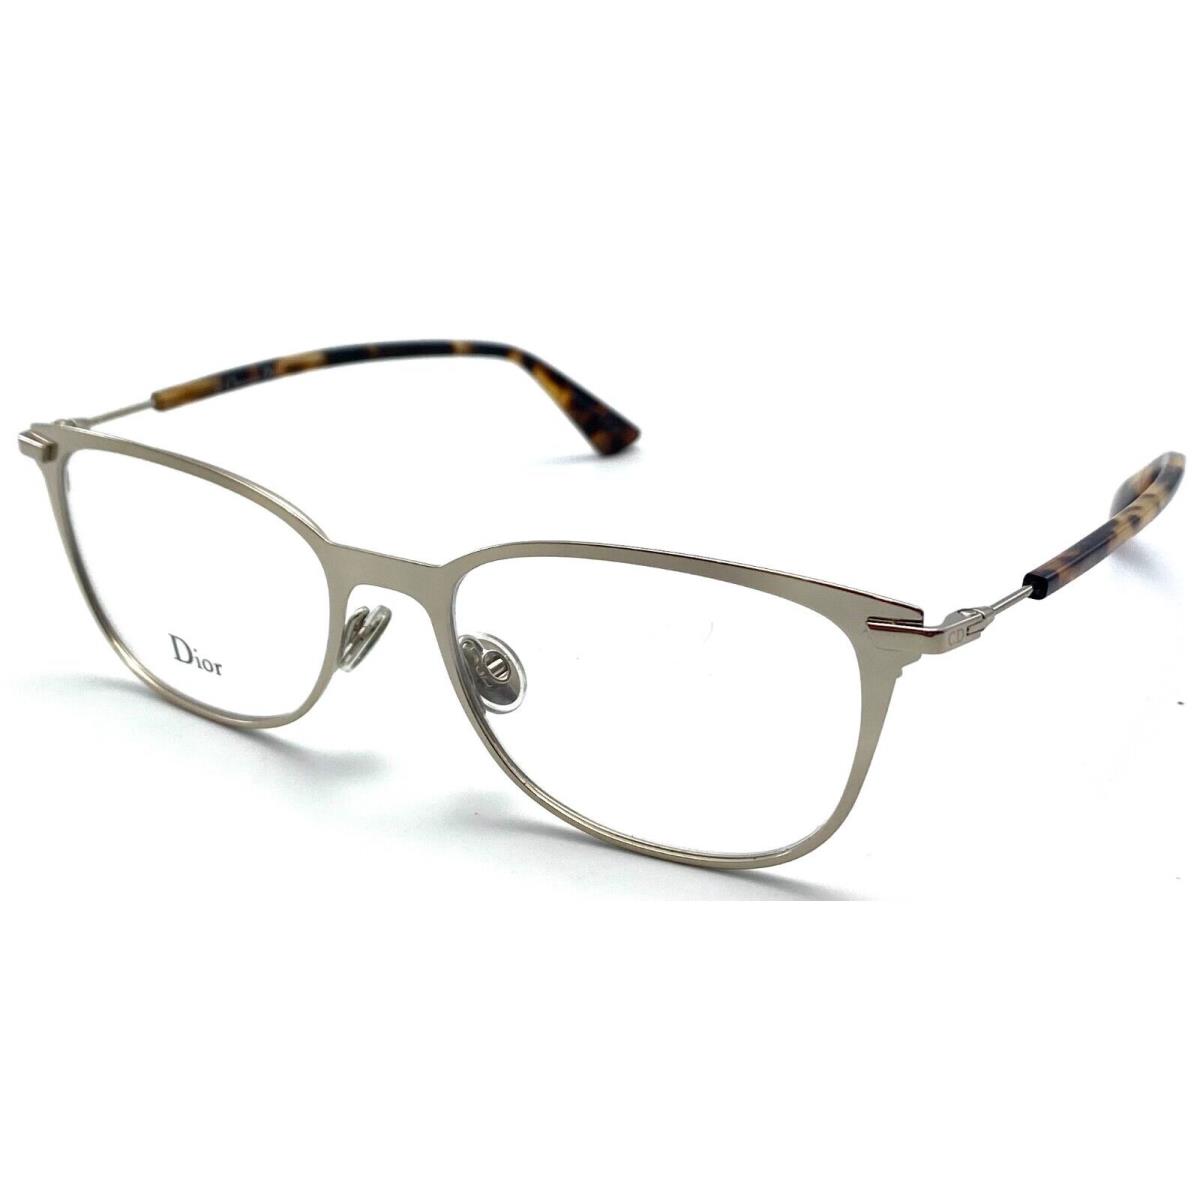 Dior DIORESSENCE13 Silver Eyeglasses Frame 53-17 145 - Frame: Silver